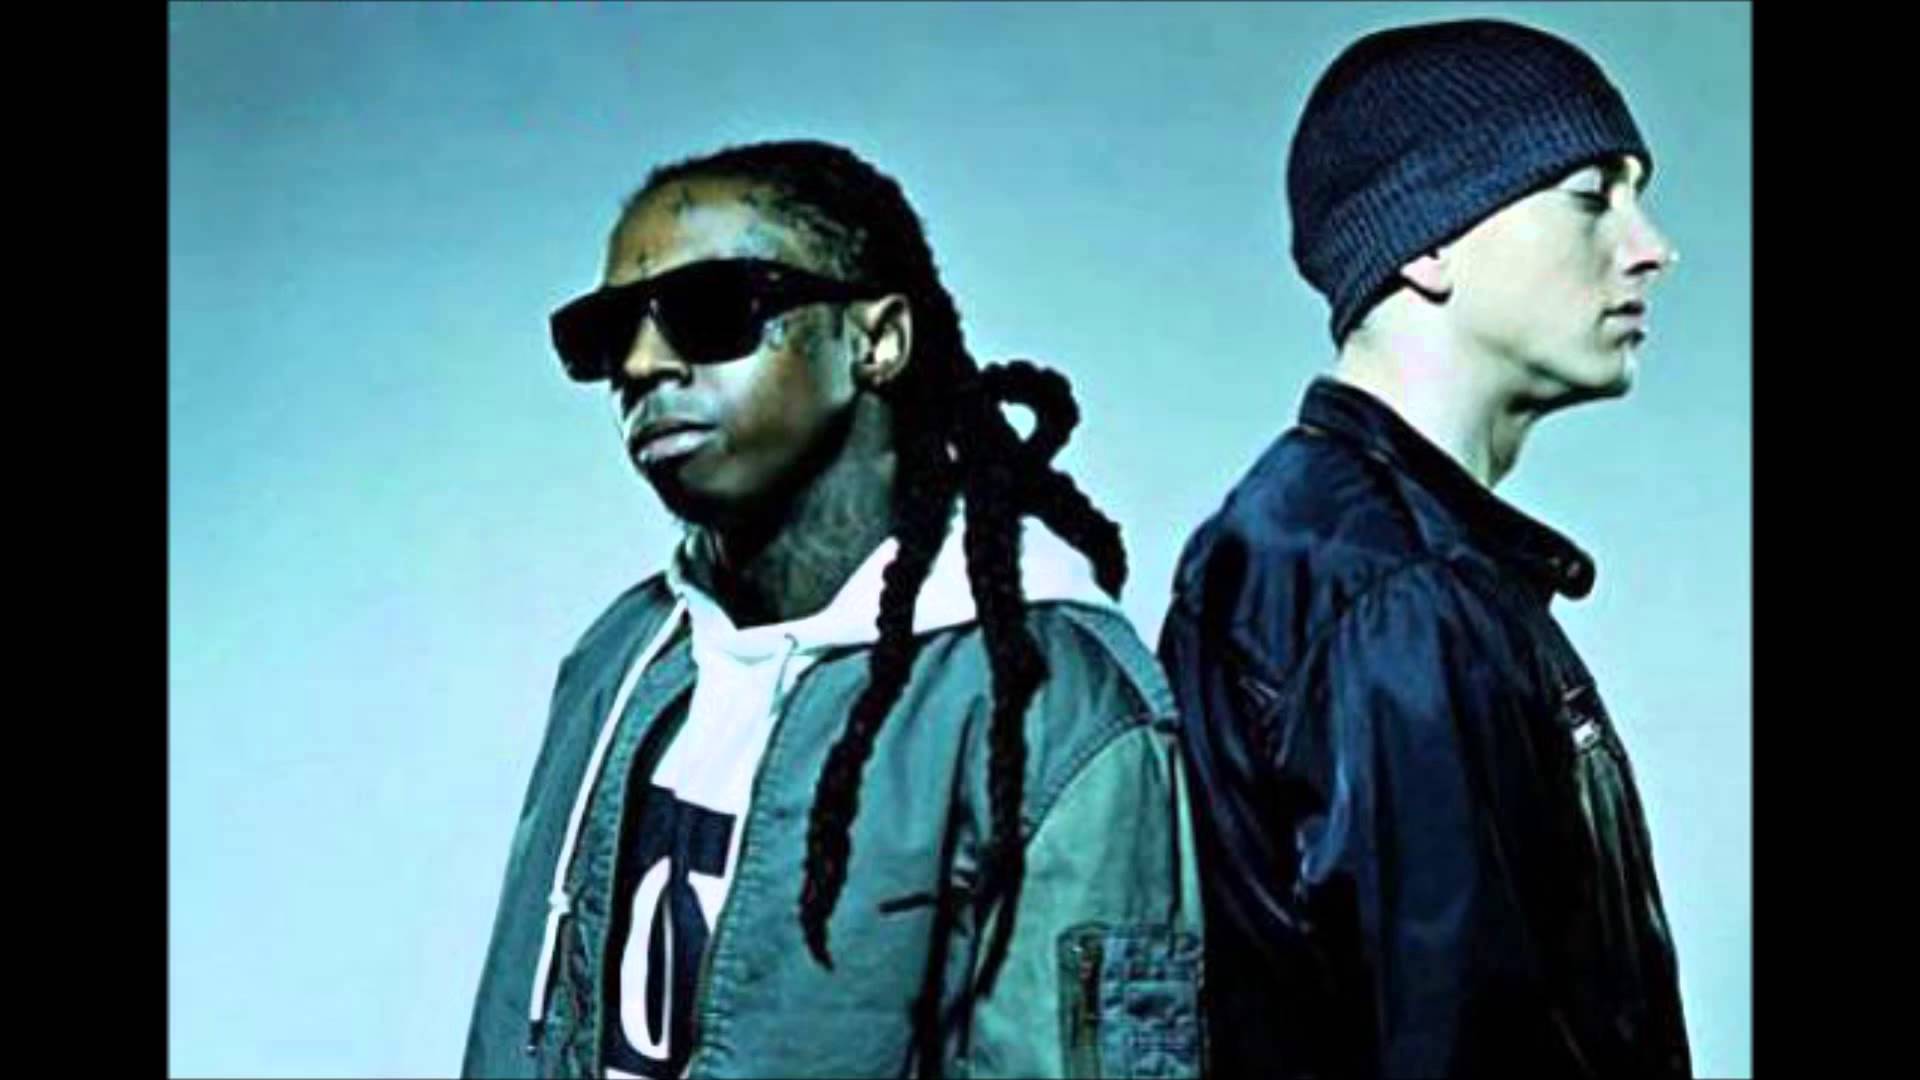 Eminem and Lil Wayne Wallpapers   Top Free Eminem and Lil Wayne